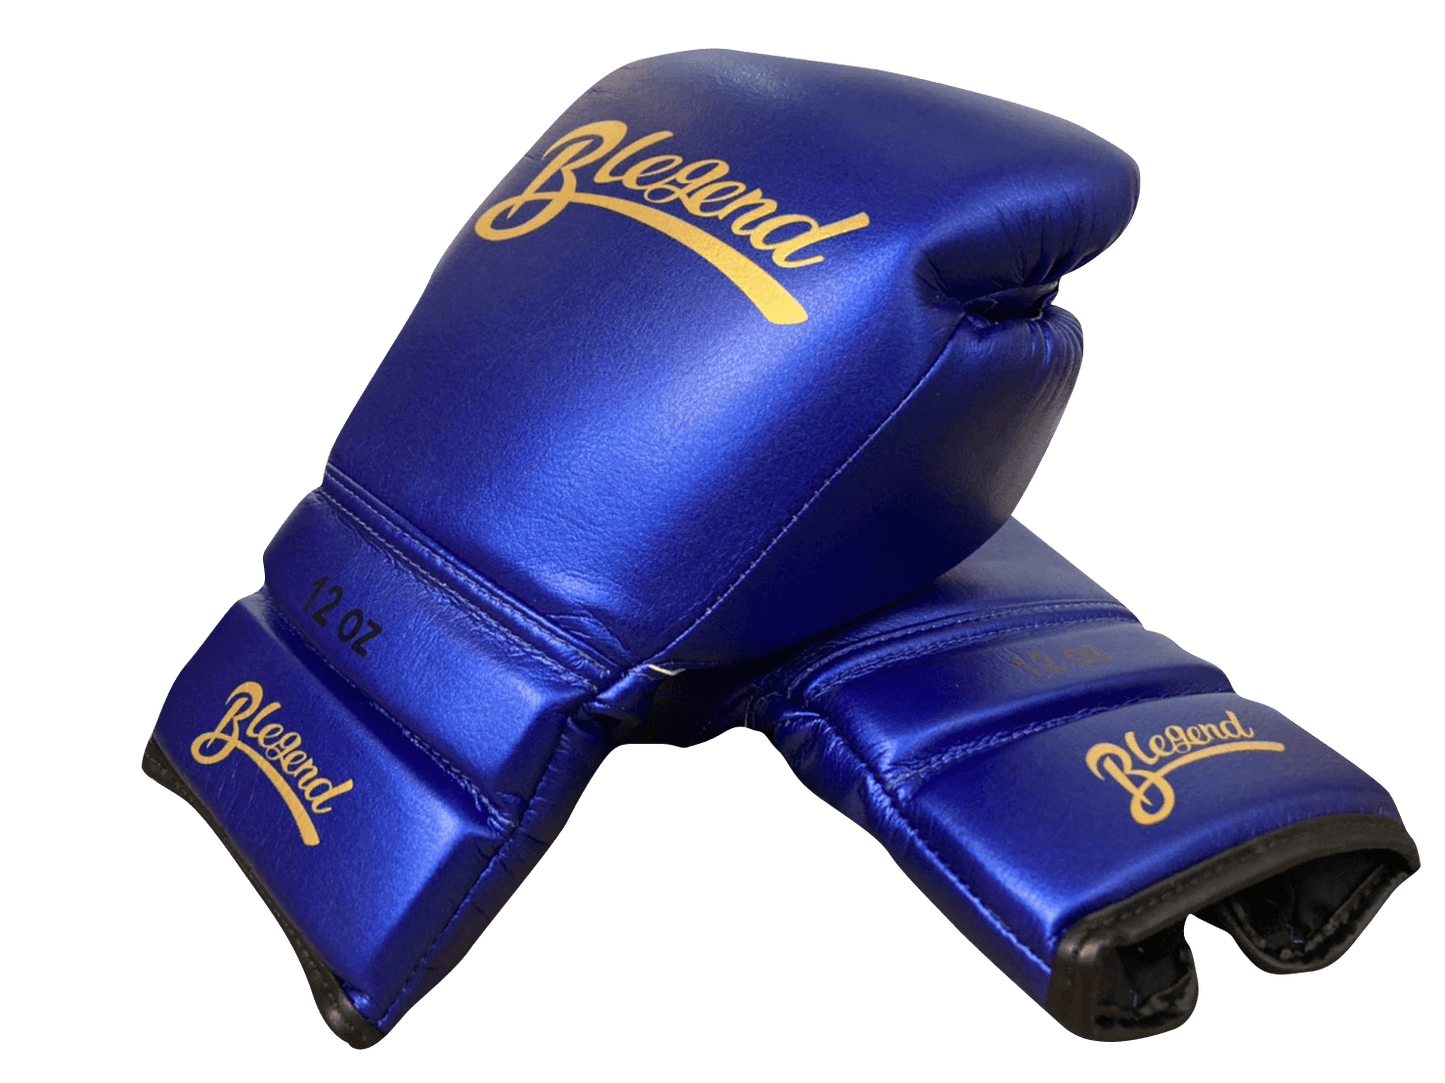 Blegend Boxing Gloves BGLLP Lace Up Shiny Blue